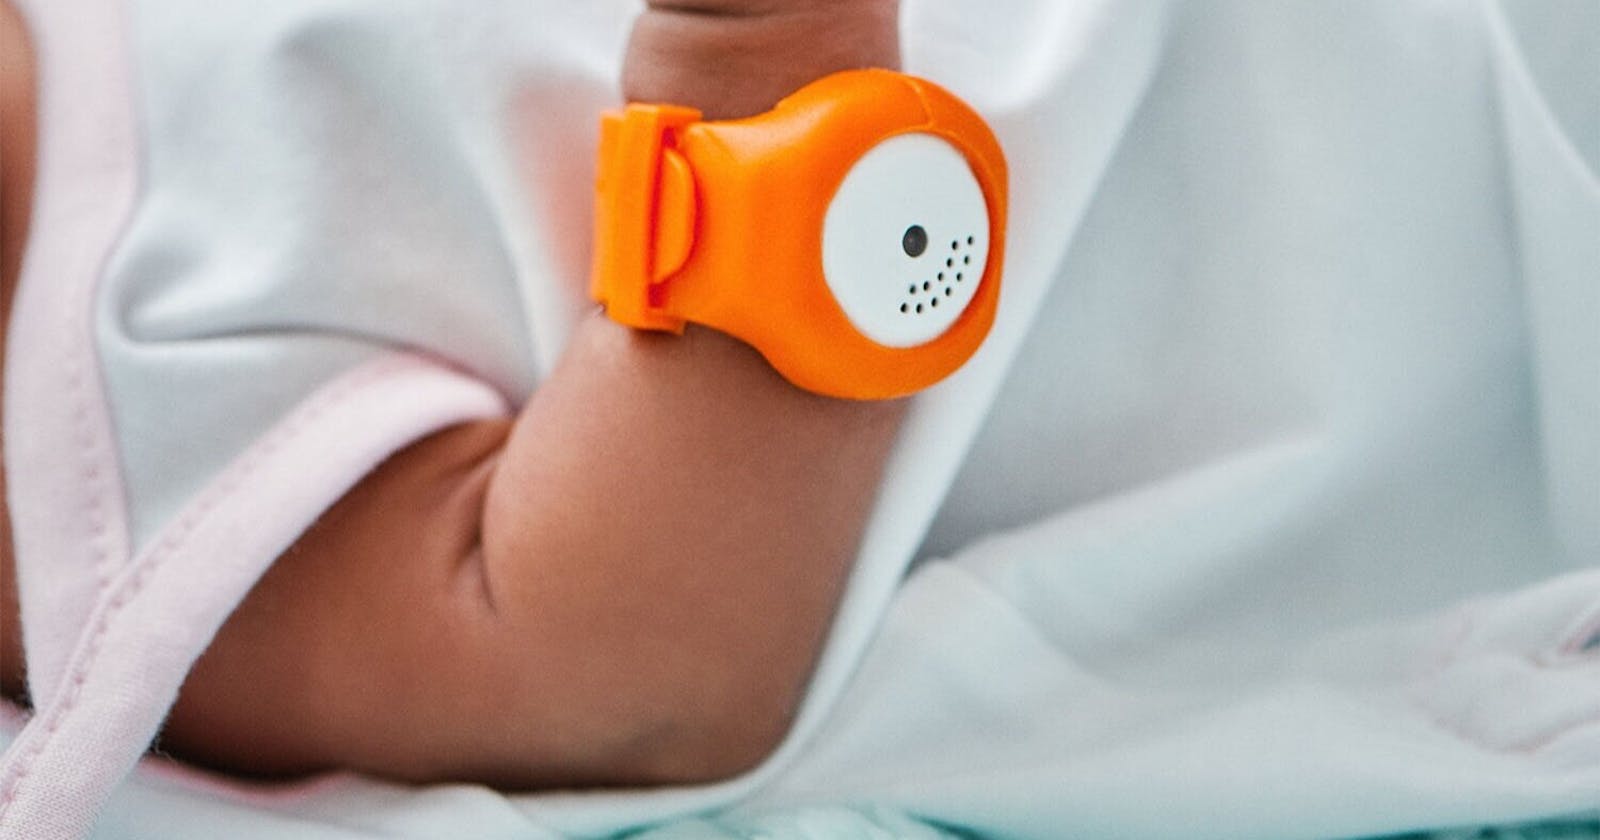 TempWatch: A Lifesaving Device for Newborns